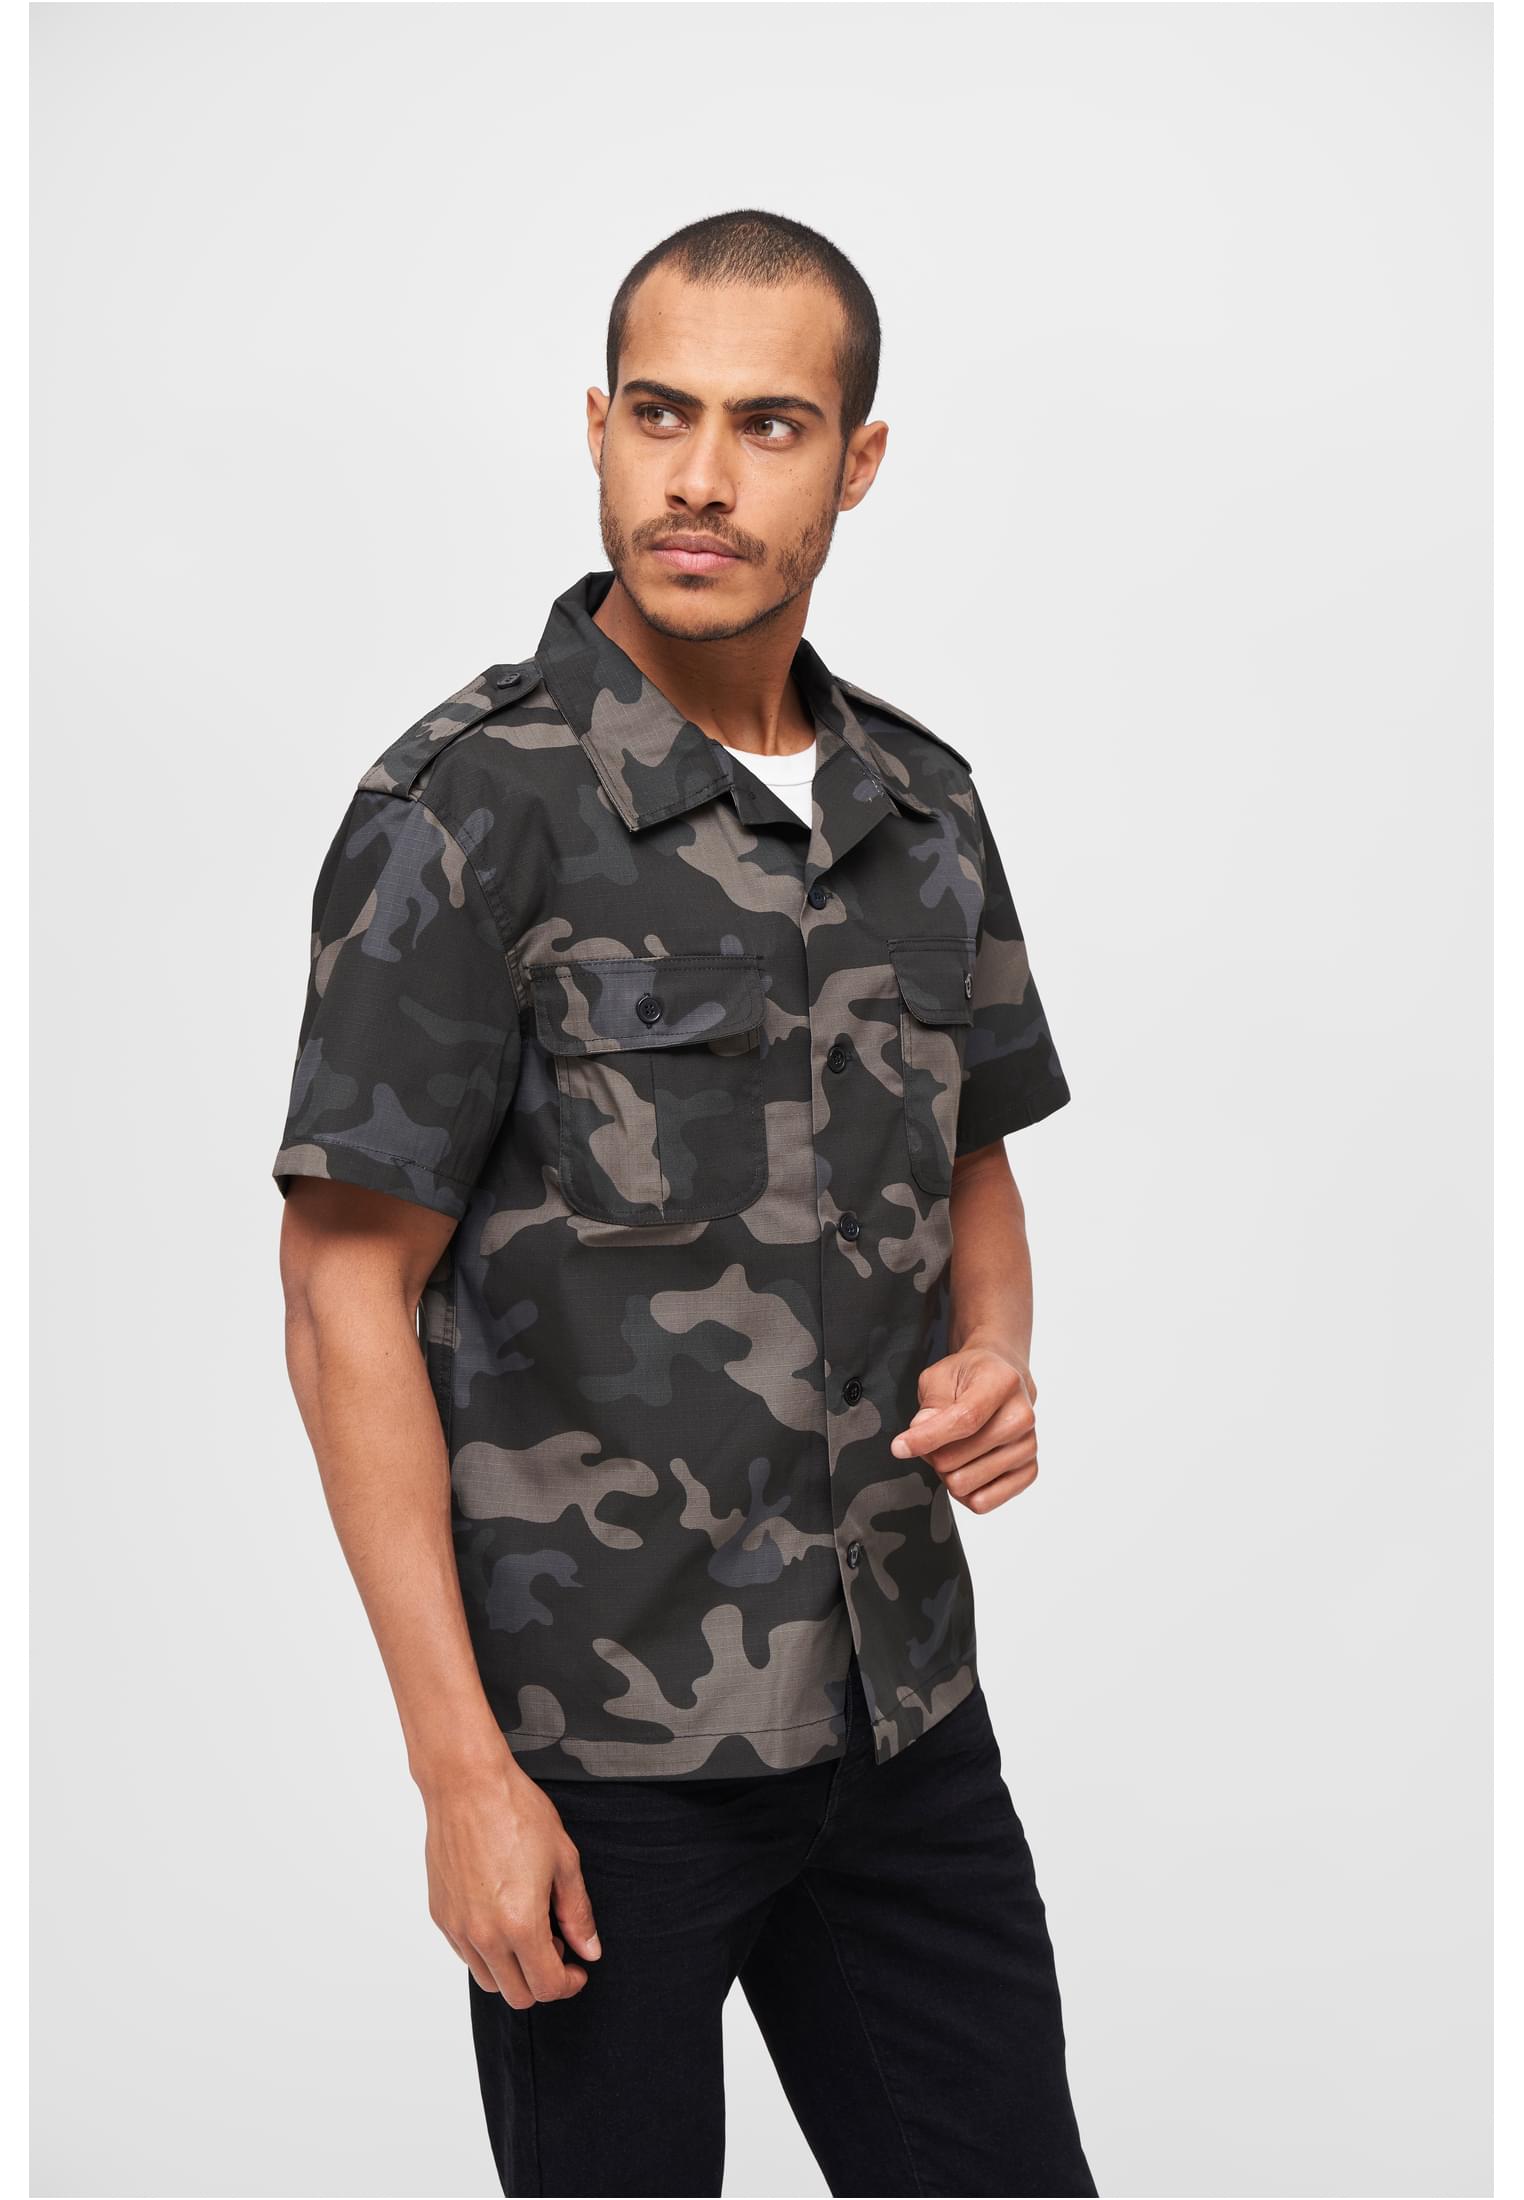 Hemden US Shirt Ripstop shortsleeve in Farbe dark camo